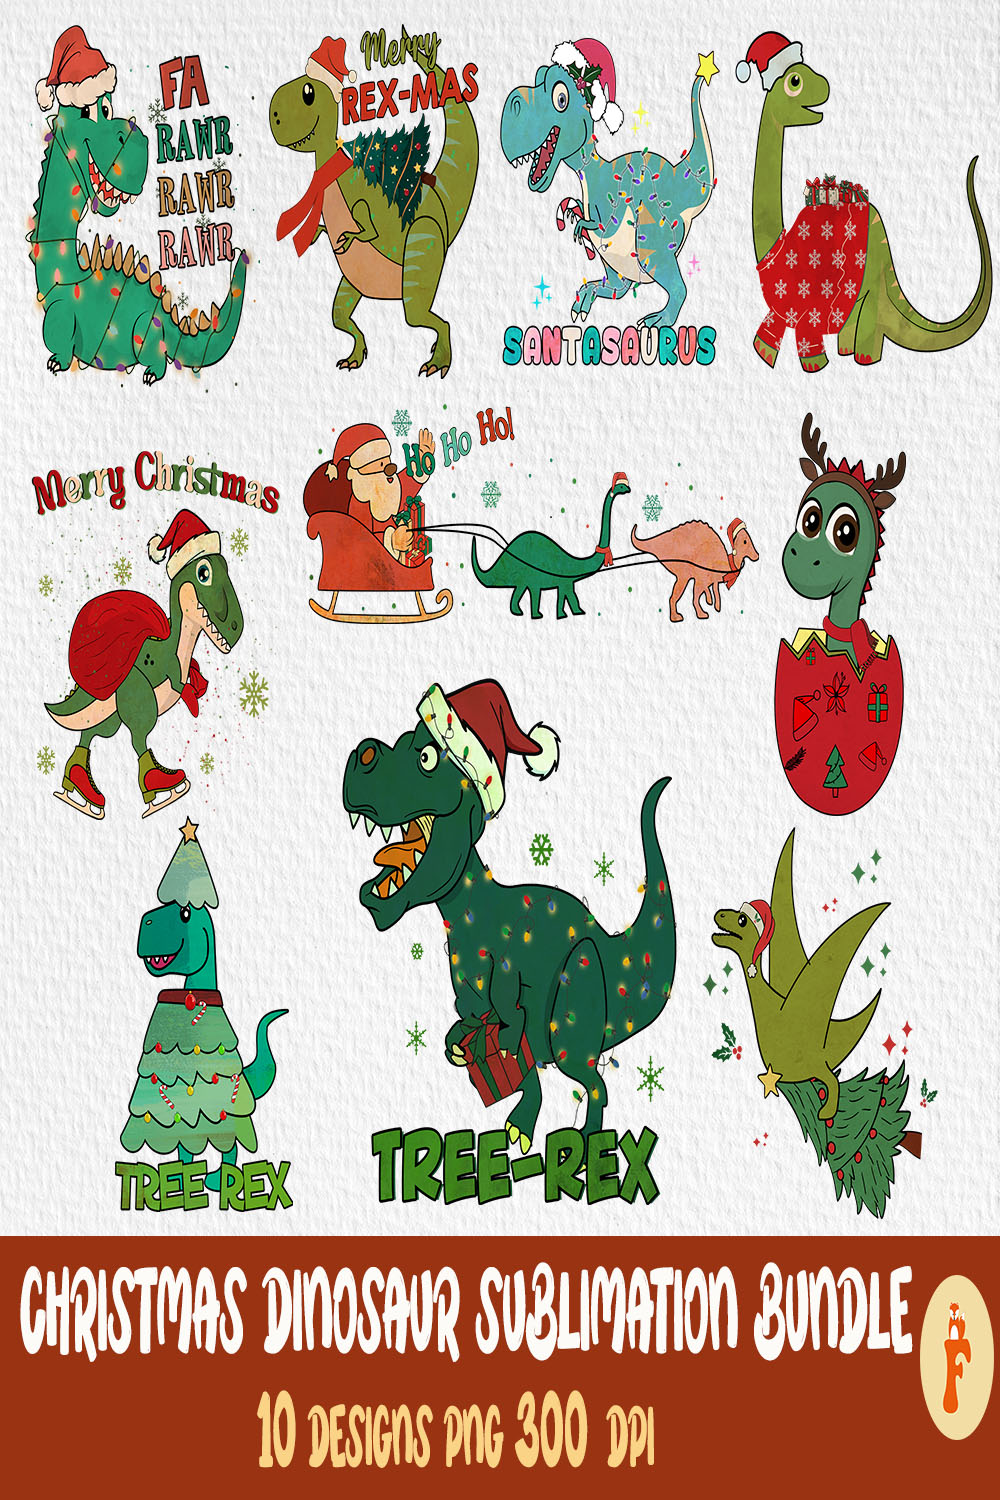 Best Christmas Dinosaur Sublimation T-Shirt Designs pinterest image.